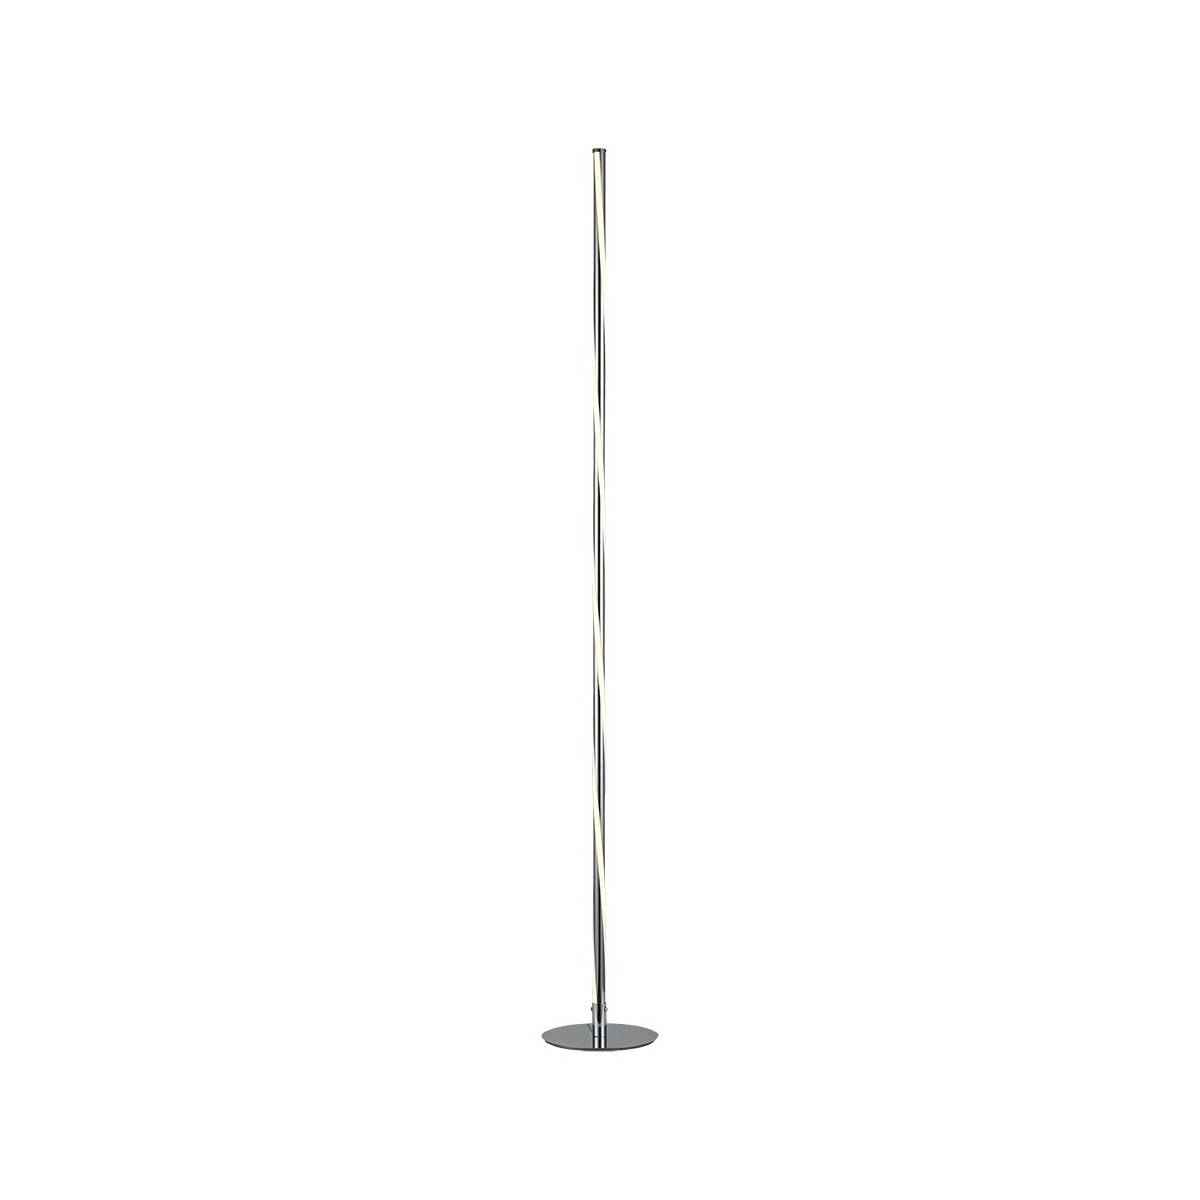 JORD FLOOR LAMP NORDIC STYLE 18W, 1250MM, CHROME FINISH 4000K